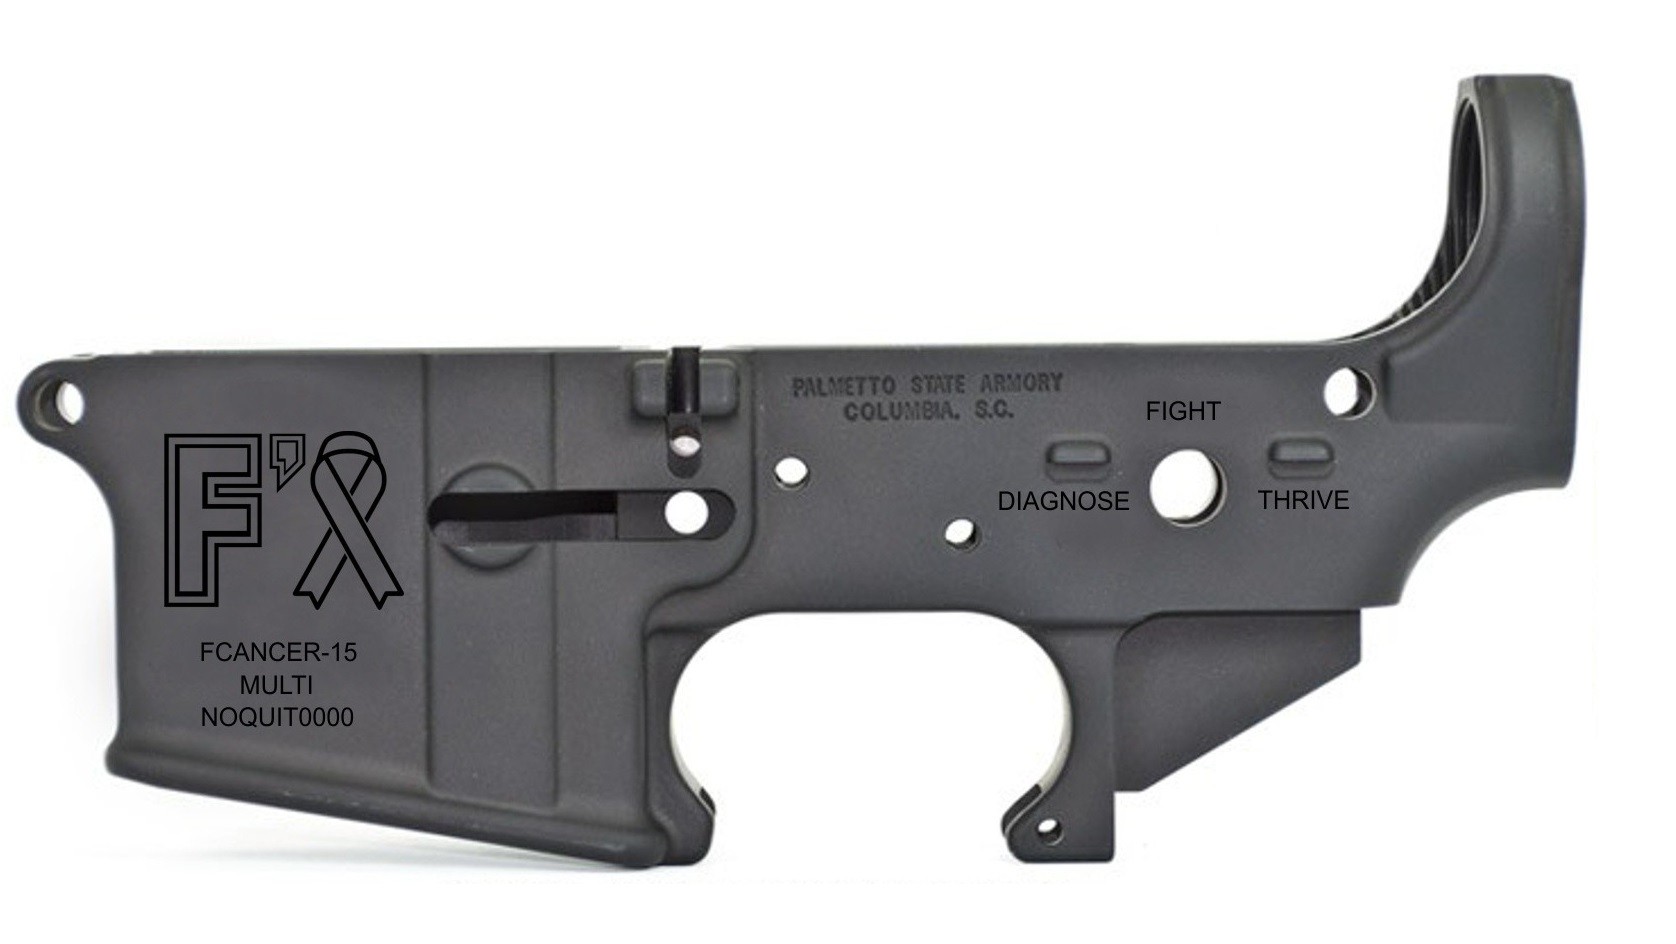 PSA AR-15 "FCancer-15" Stripped Lower Receiver